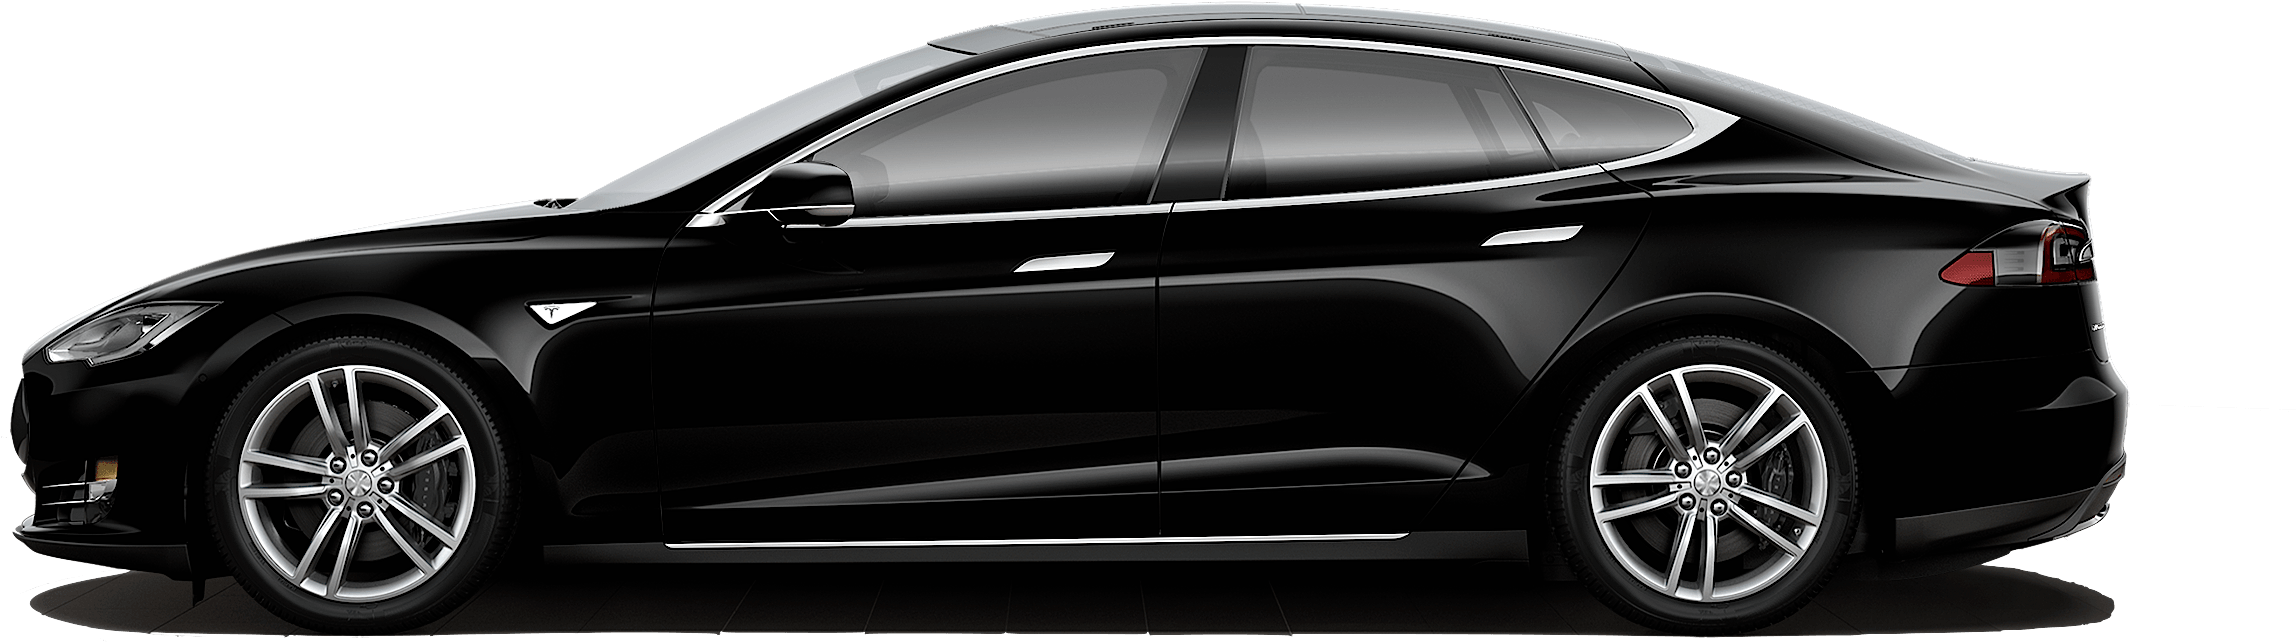 Download PNG image - Tesla Car Transparent PNG 